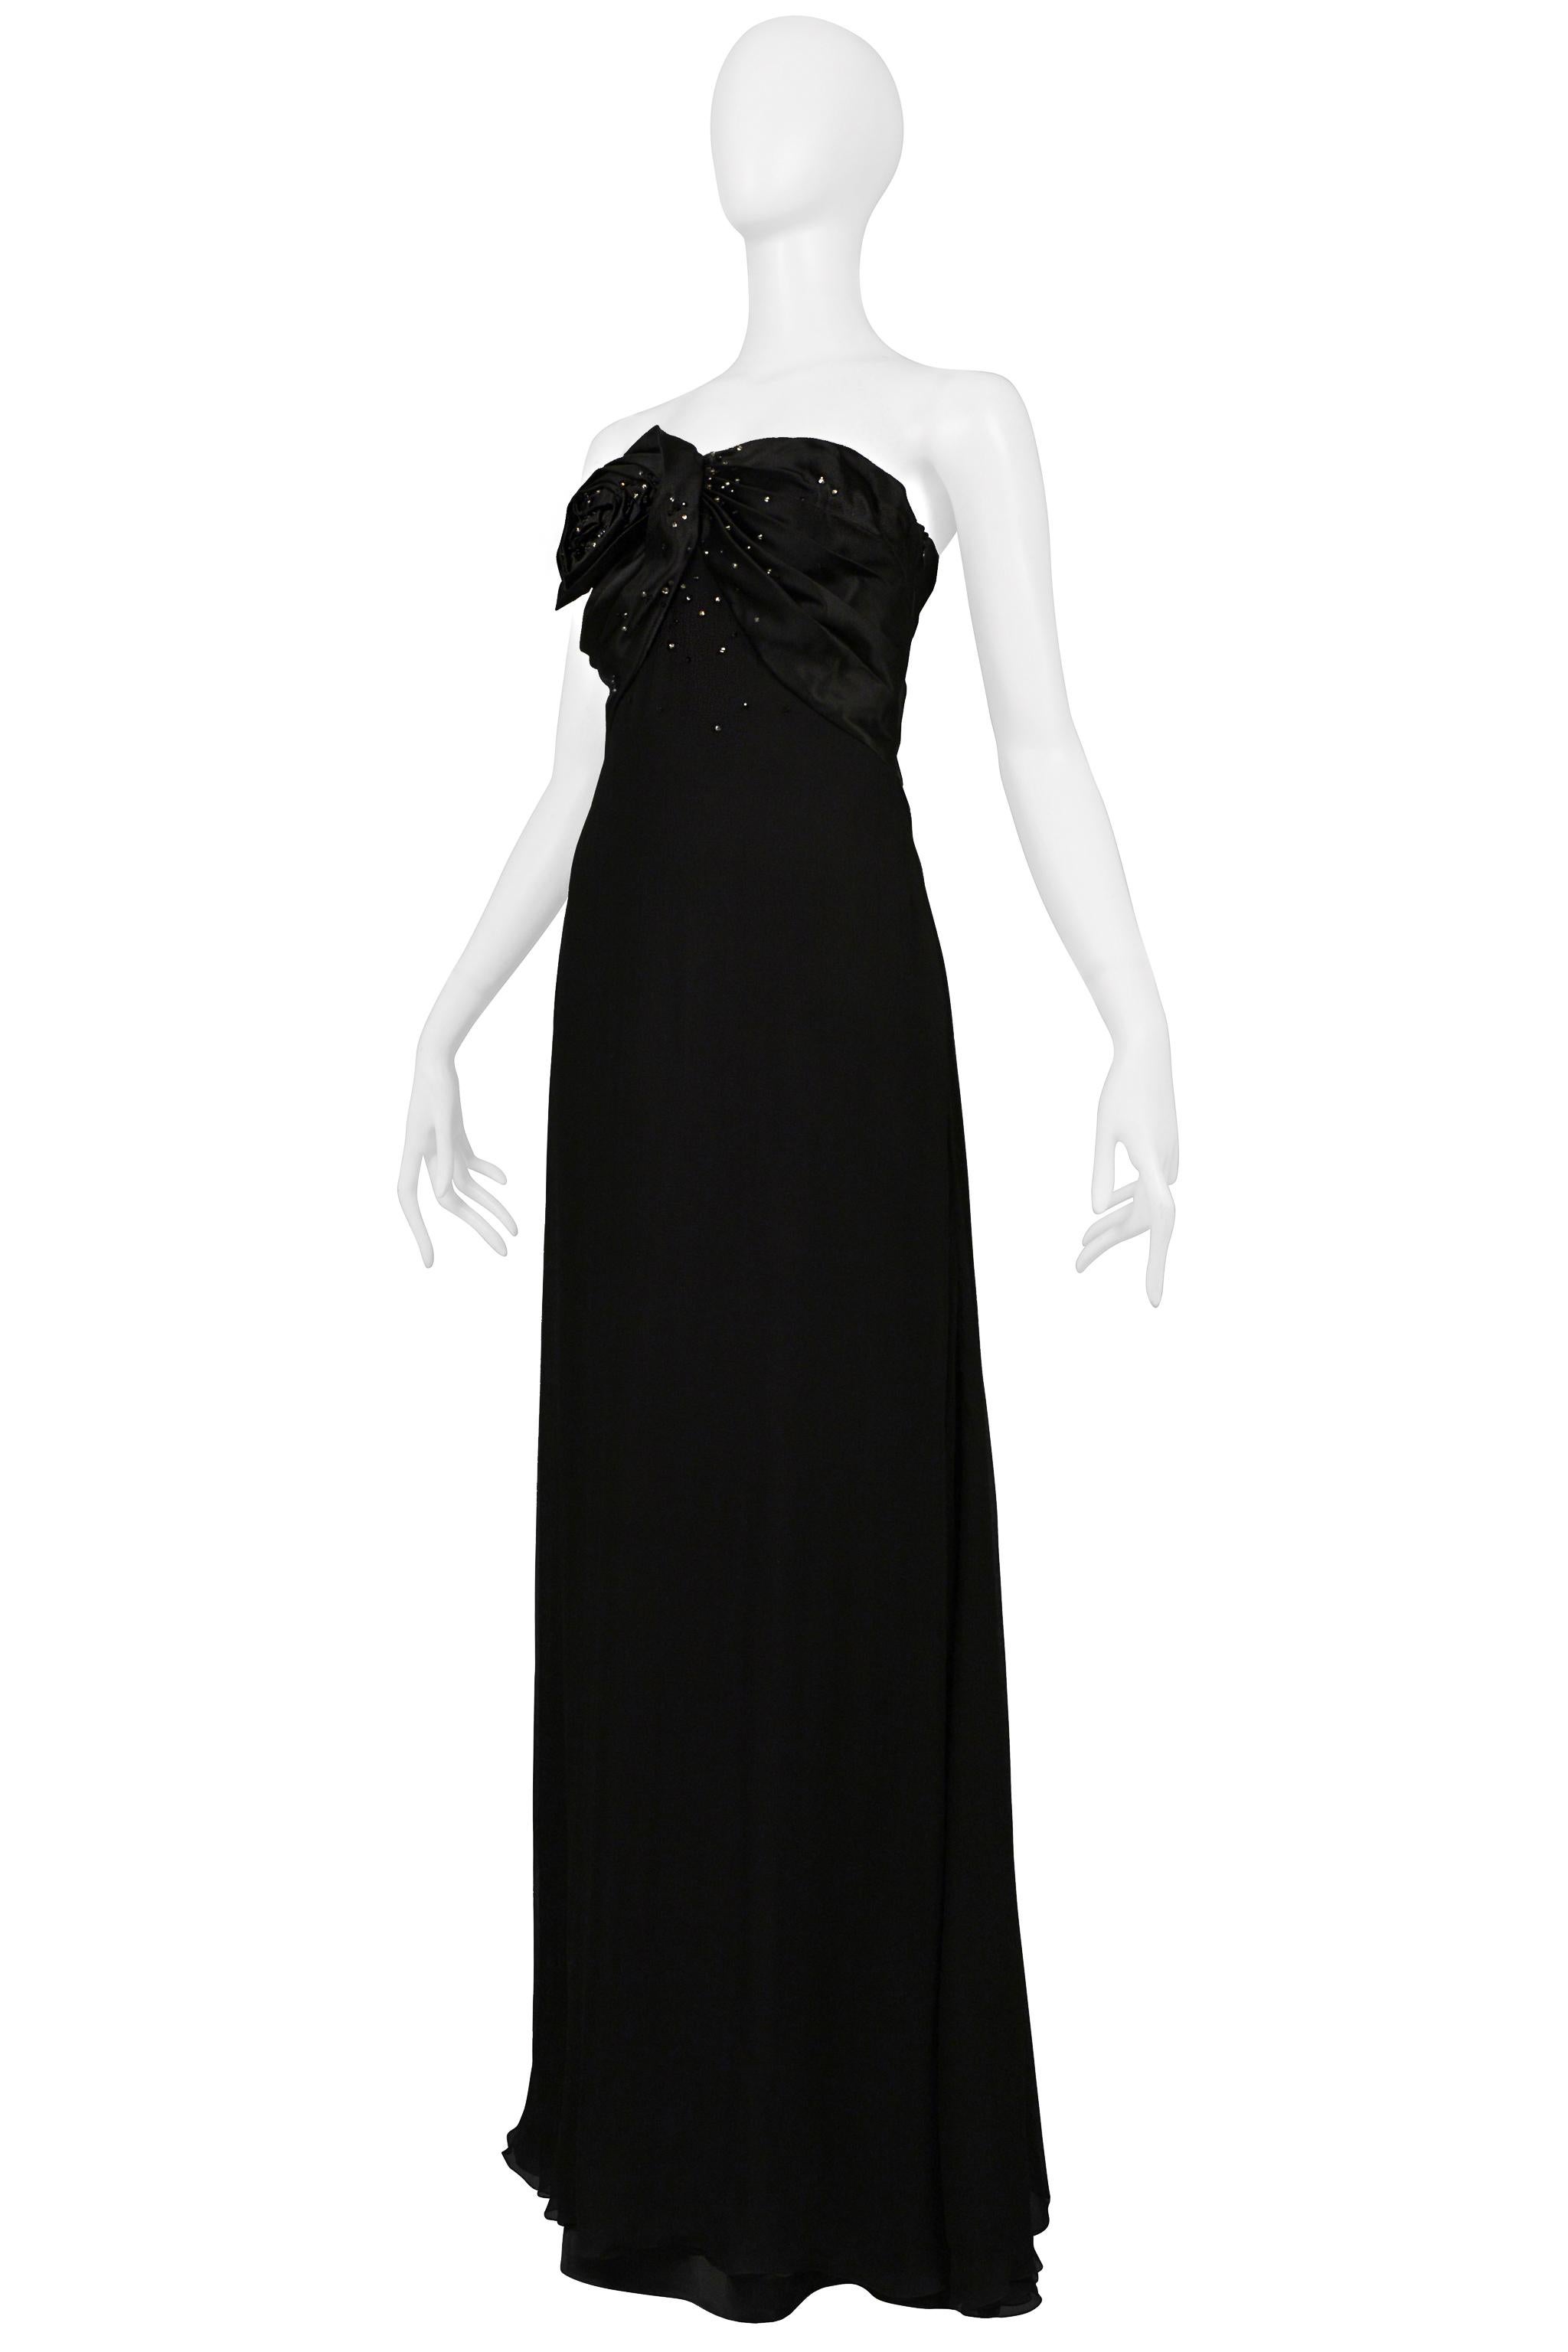 Women's Christian Dior By John Galliano Black Gown W/ Rosettes & Rhinestones 2008 Resort For Sale